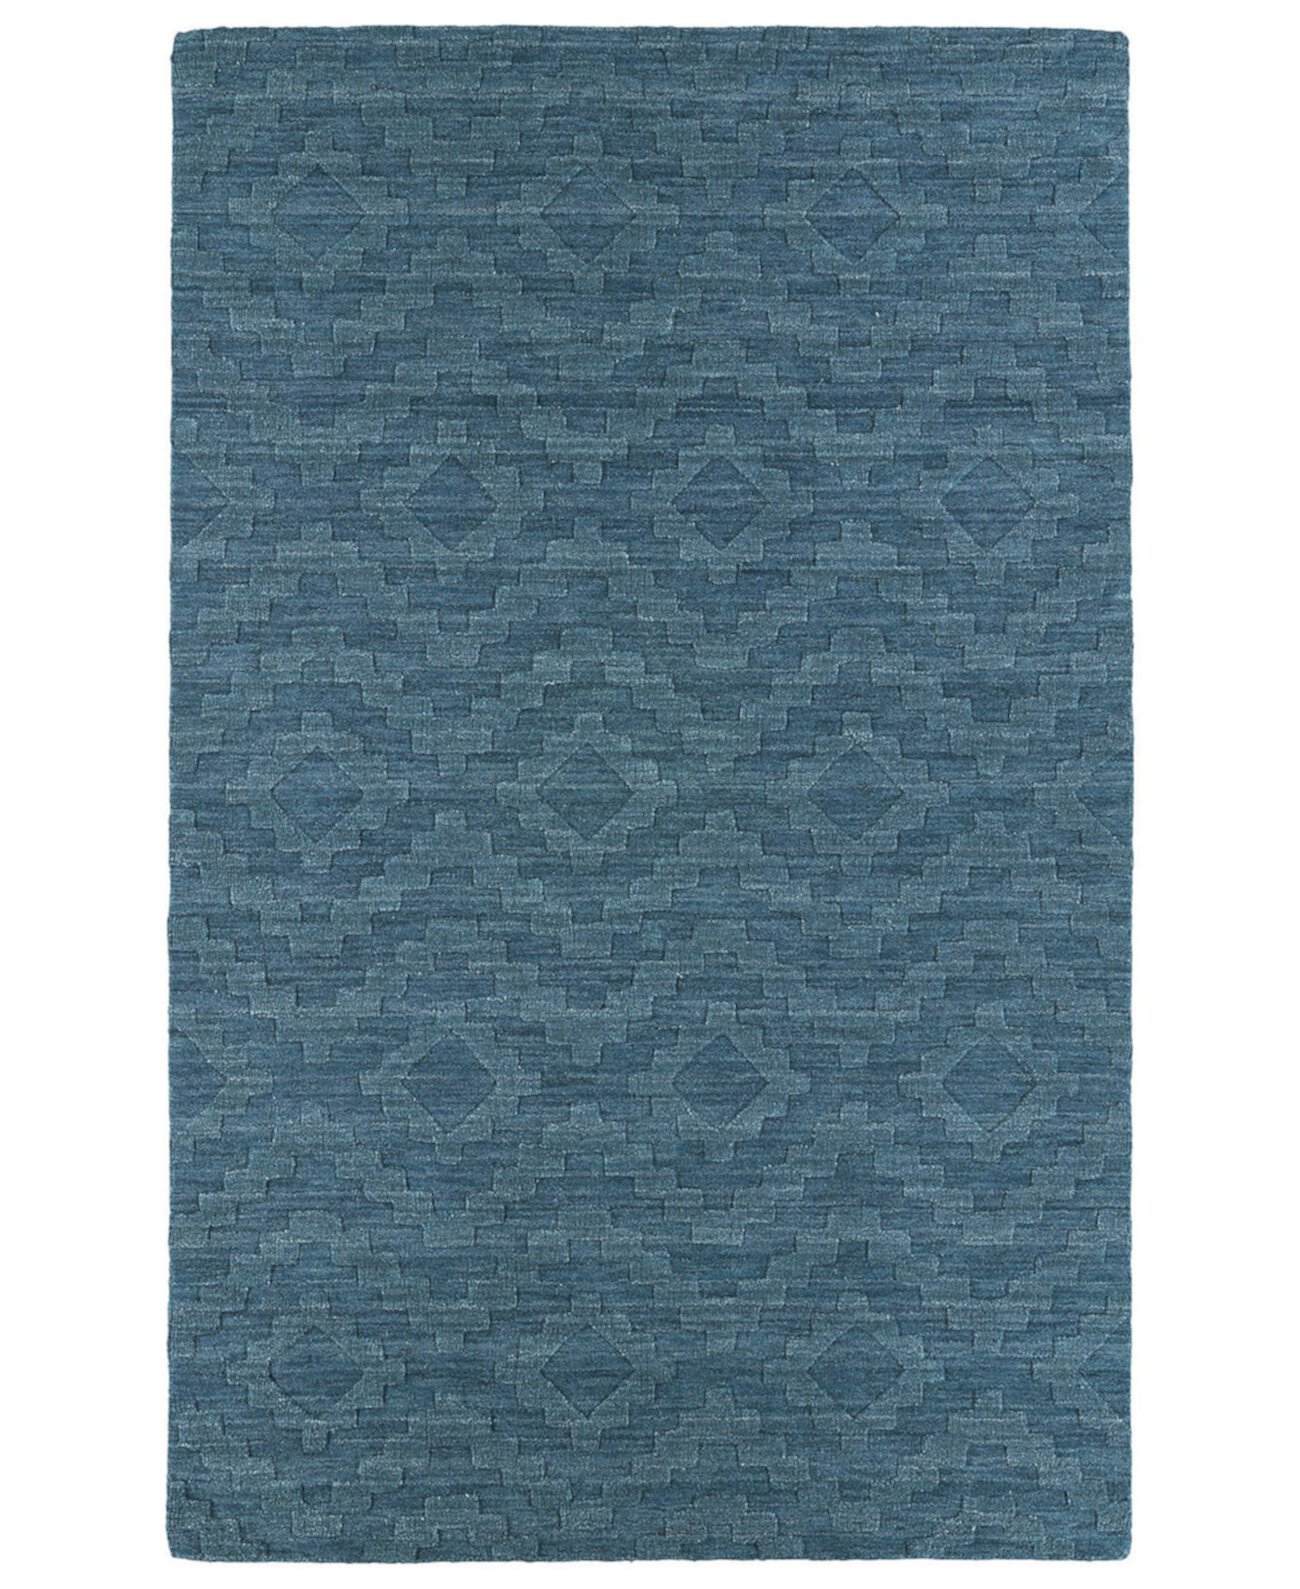 Imprints Modern IPM04-78 Turquoise 3'6" x 5'6" Area Rug Kaleen